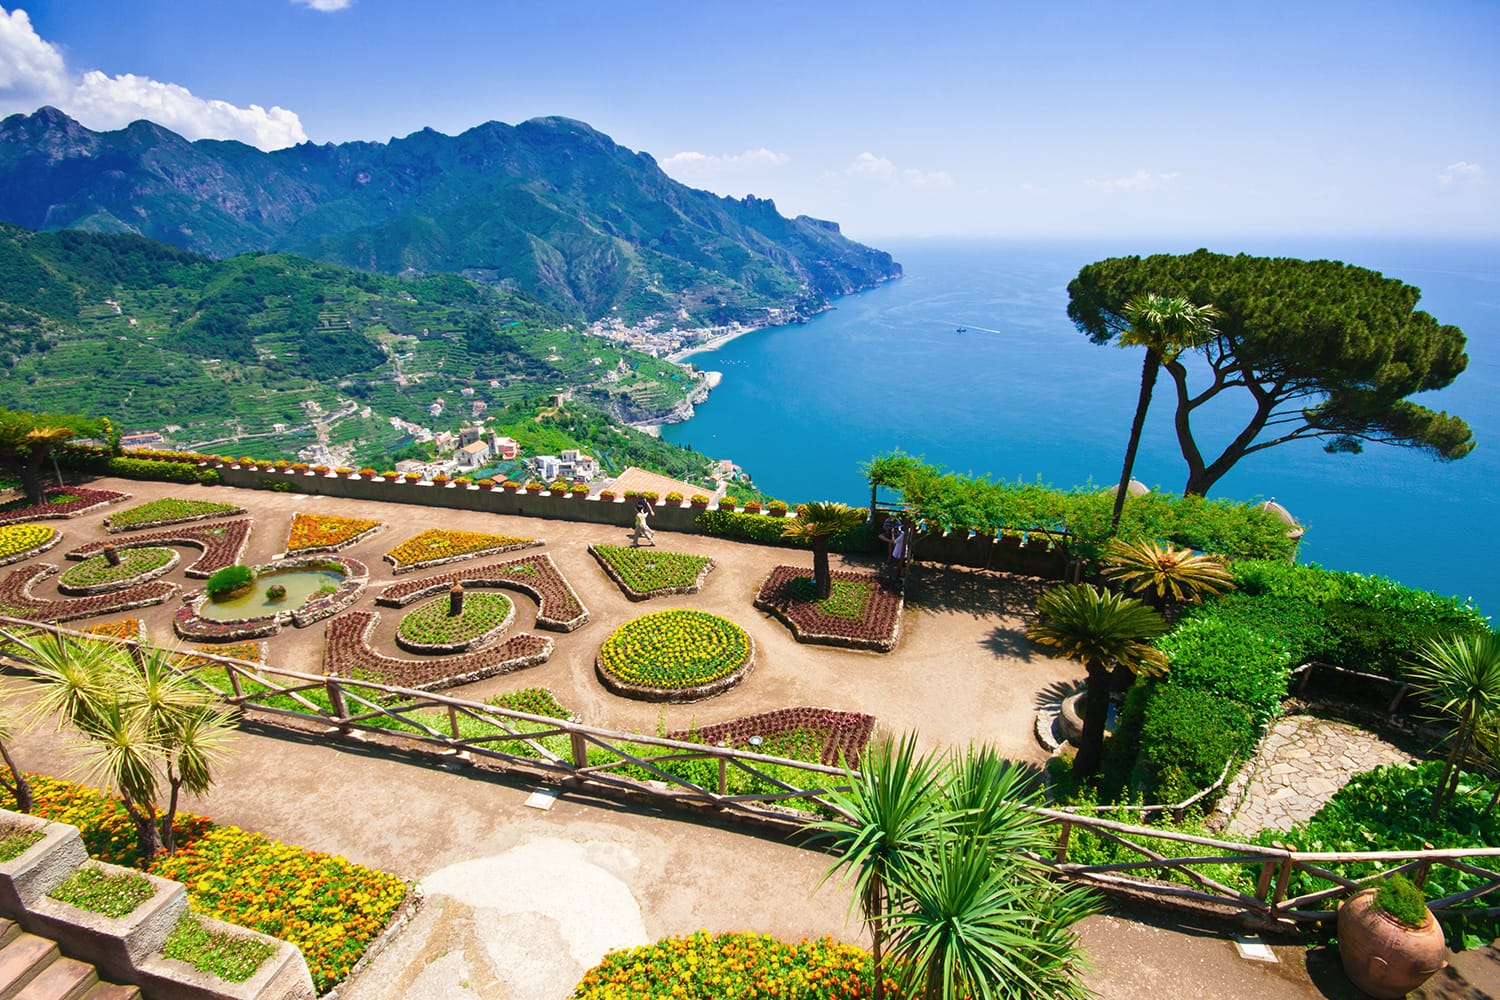 Panoramic view of the Amalfi Coast from Villa Rufolo (Ravello), Italy